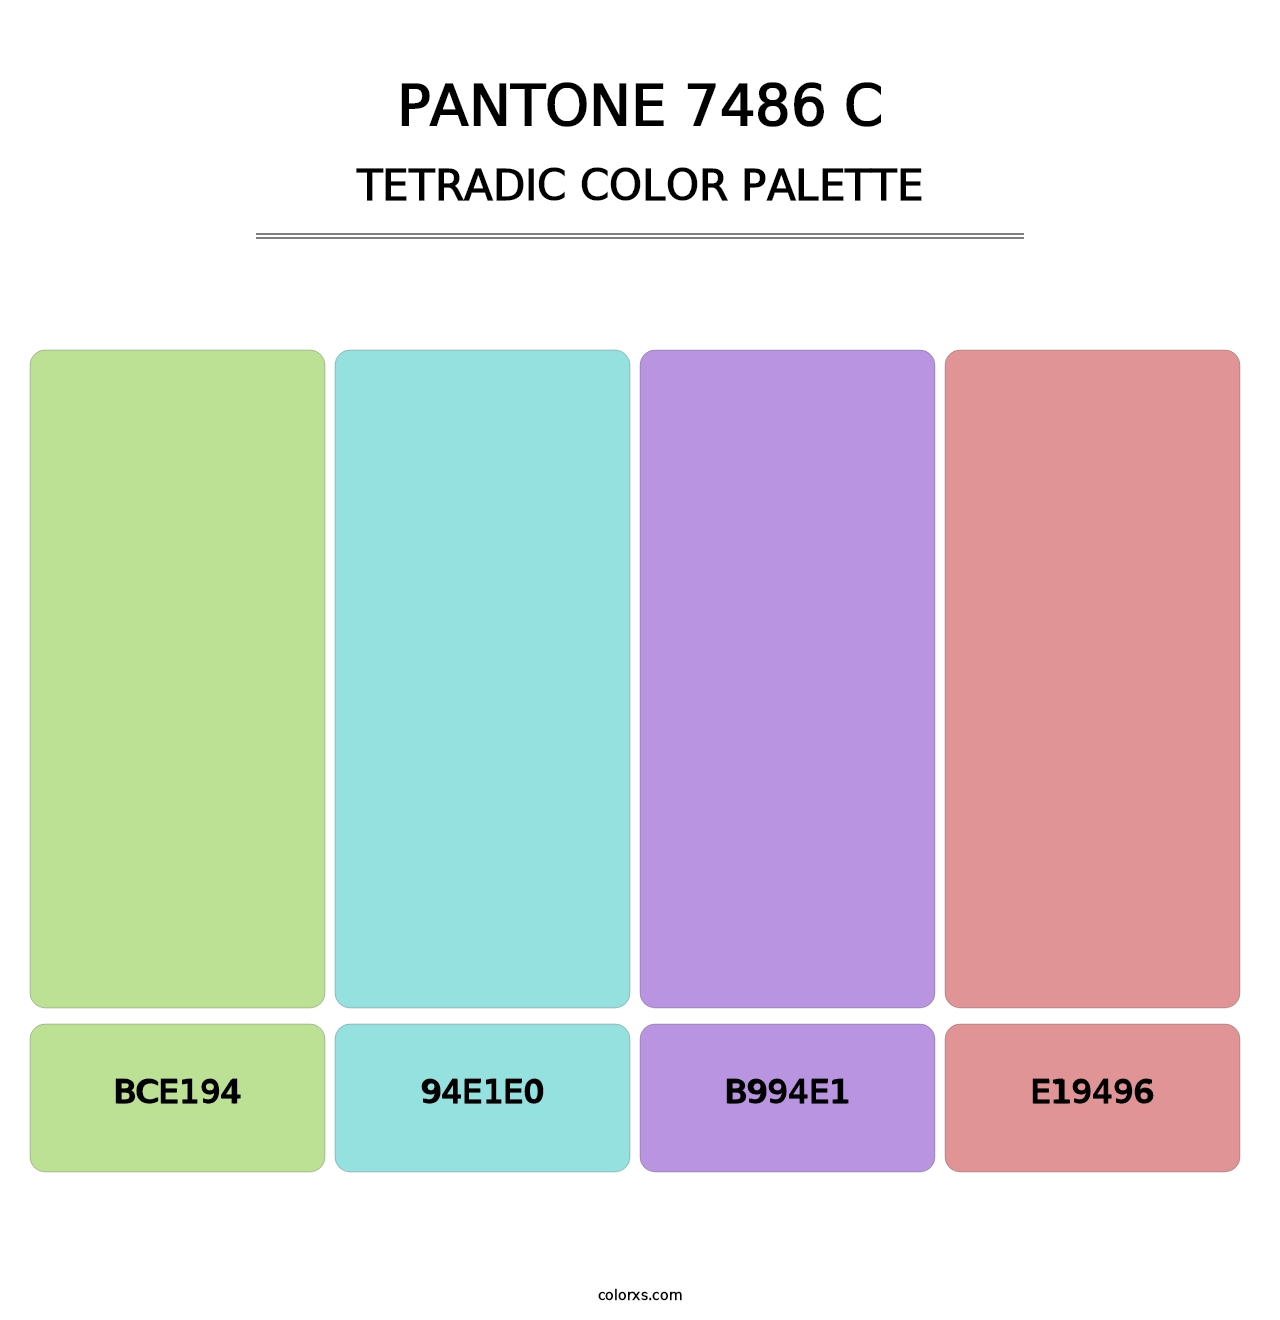 PANTONE 7486 C - Tetradic Color Palette